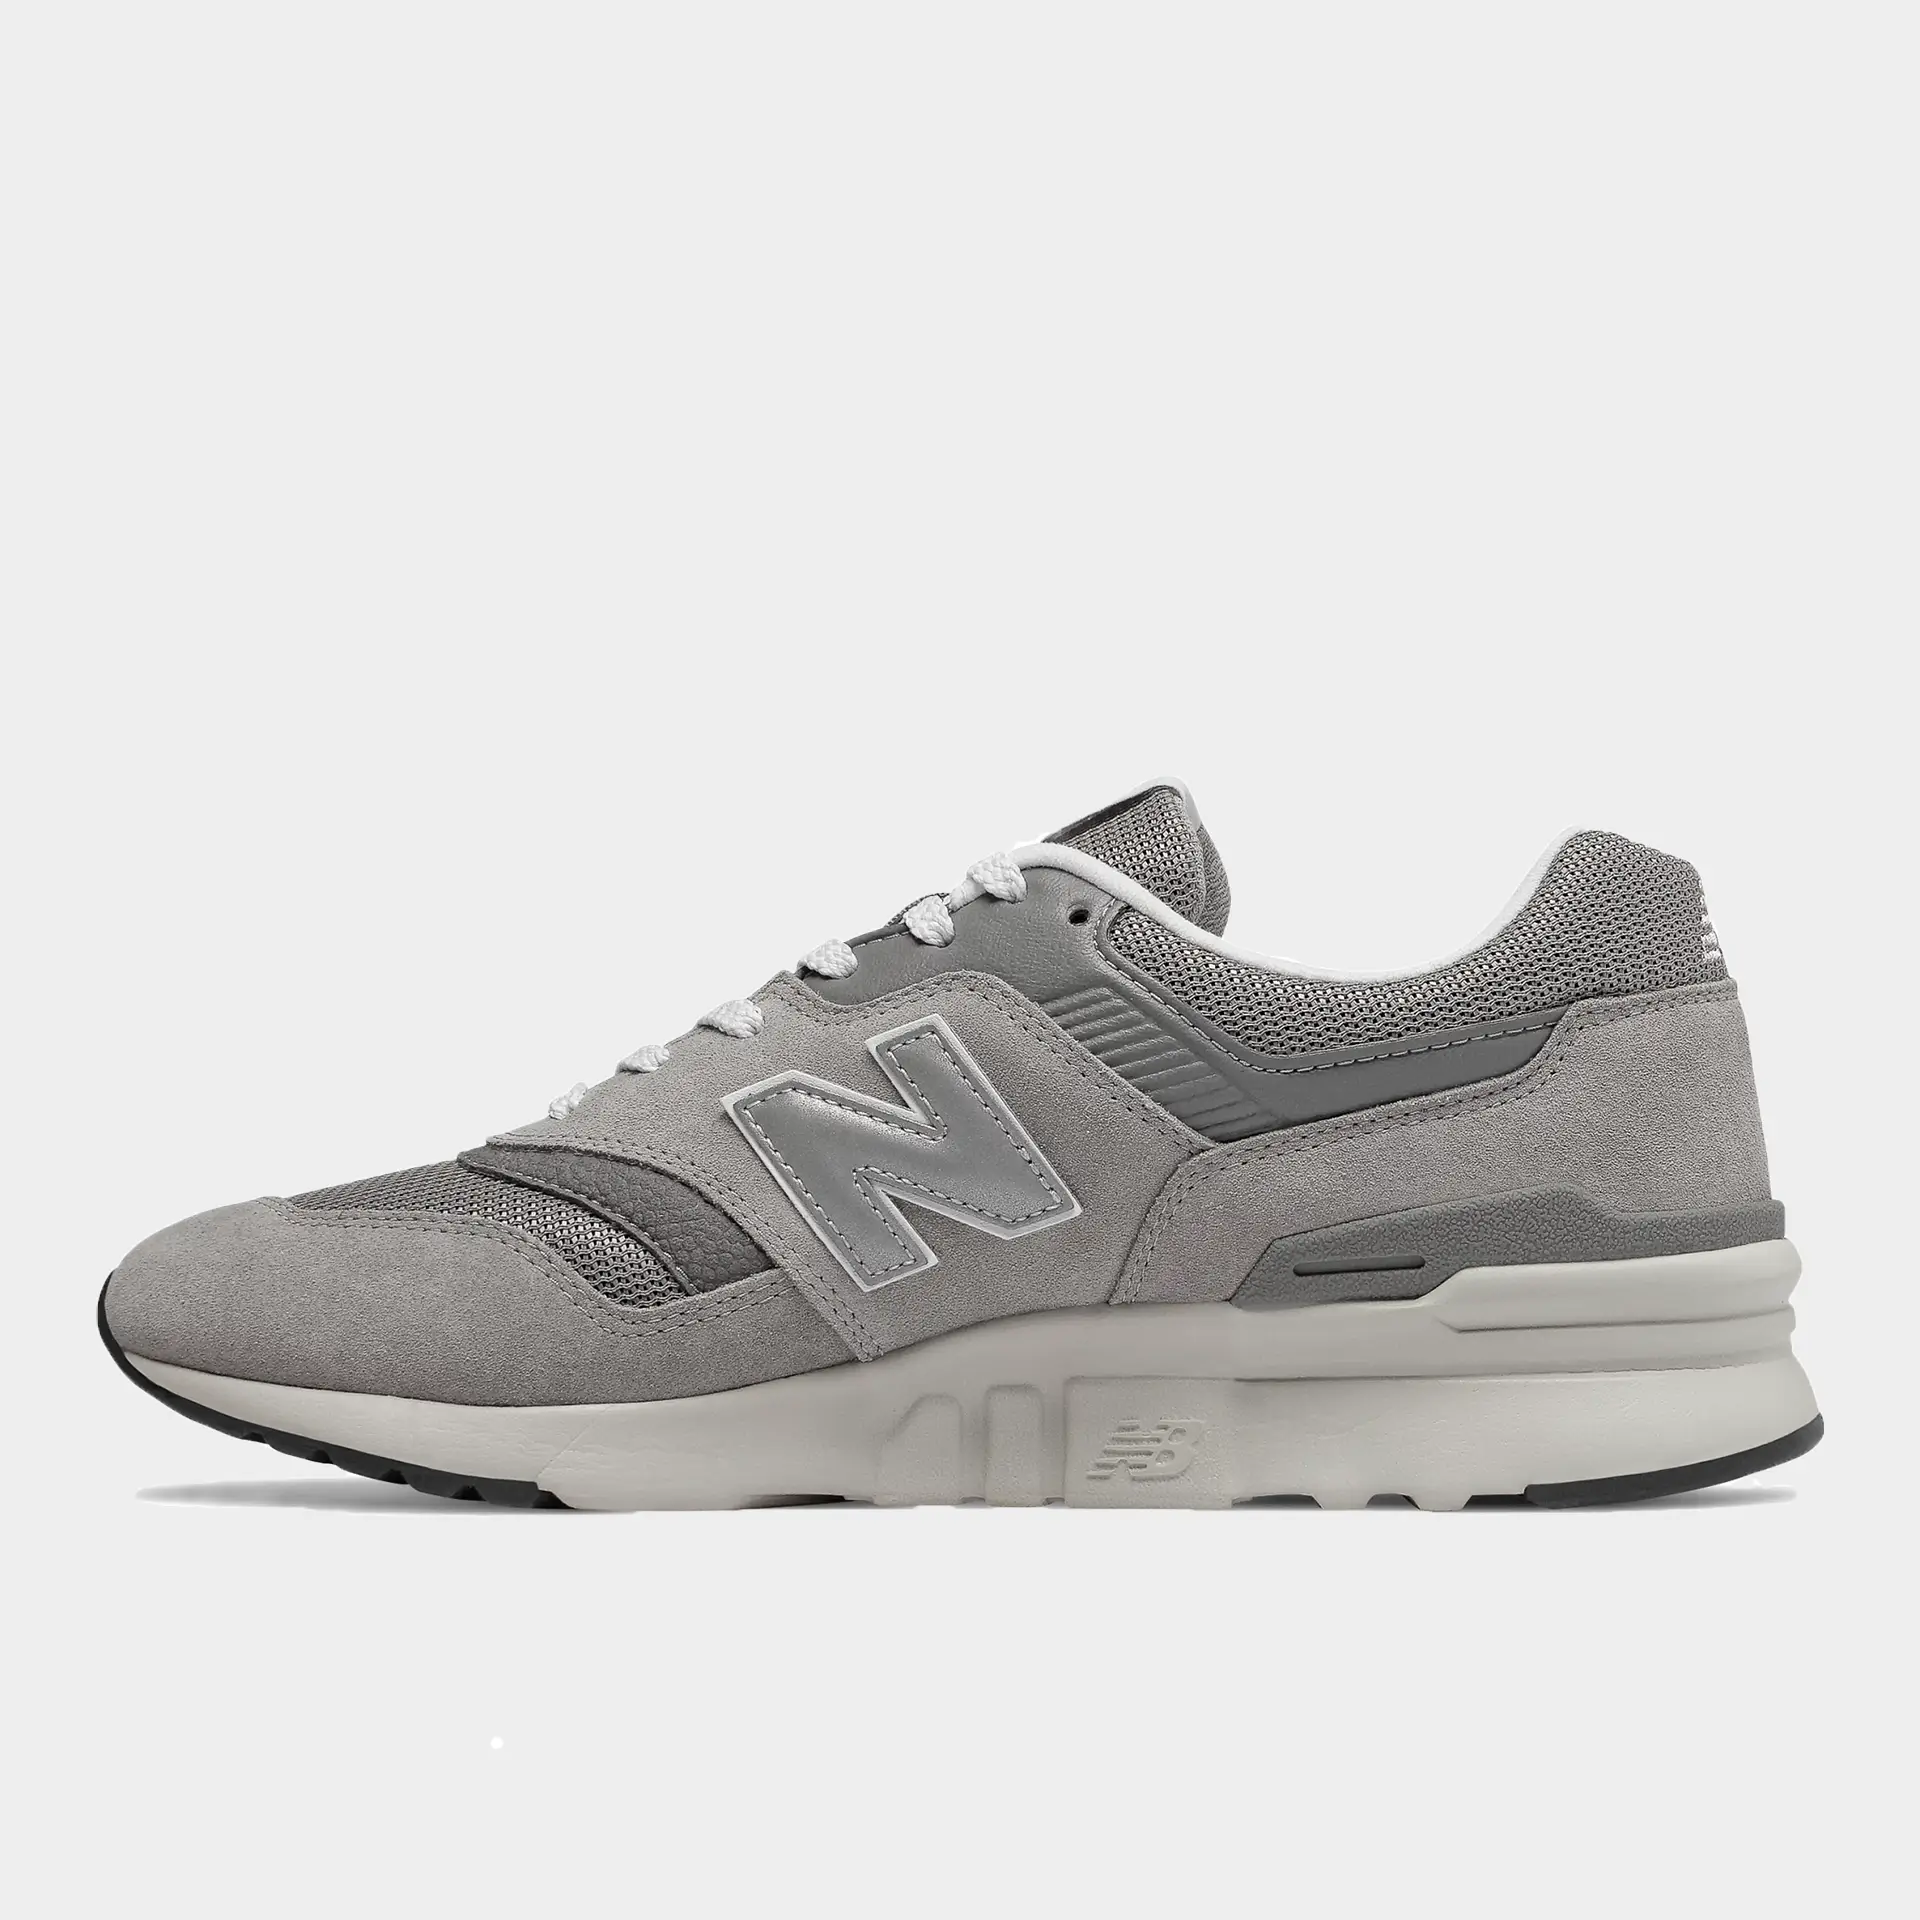 New Balance CM997 Sneaker Marblehead/Silver